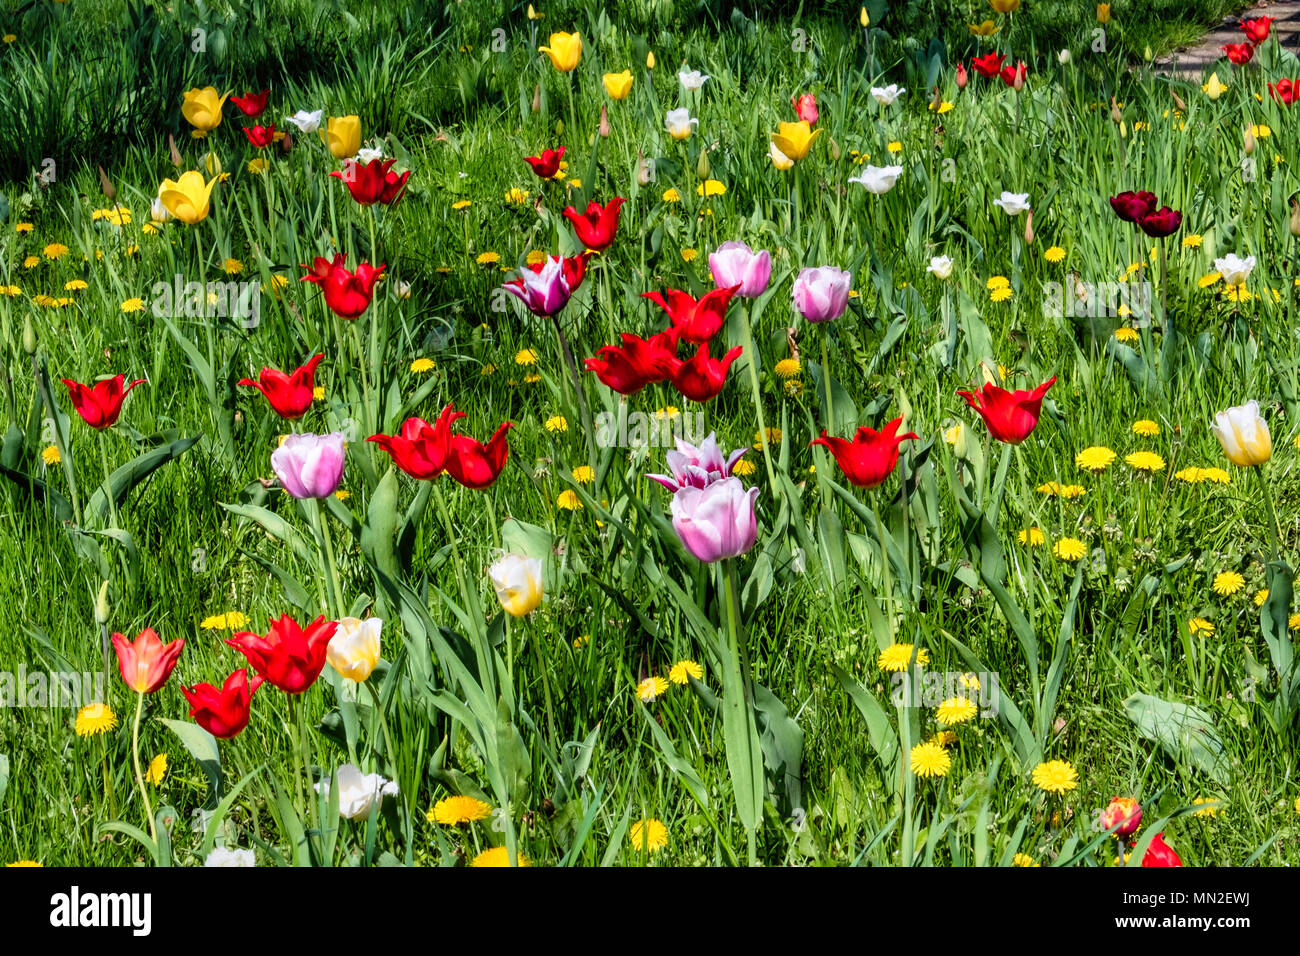 Britzer Garten, Neukölln, Berlin, Germany. 2018. Garden with spring flowering bulbs, Yellow, red & pink tulips and yellow dandelions in green grass.   Stock Photo